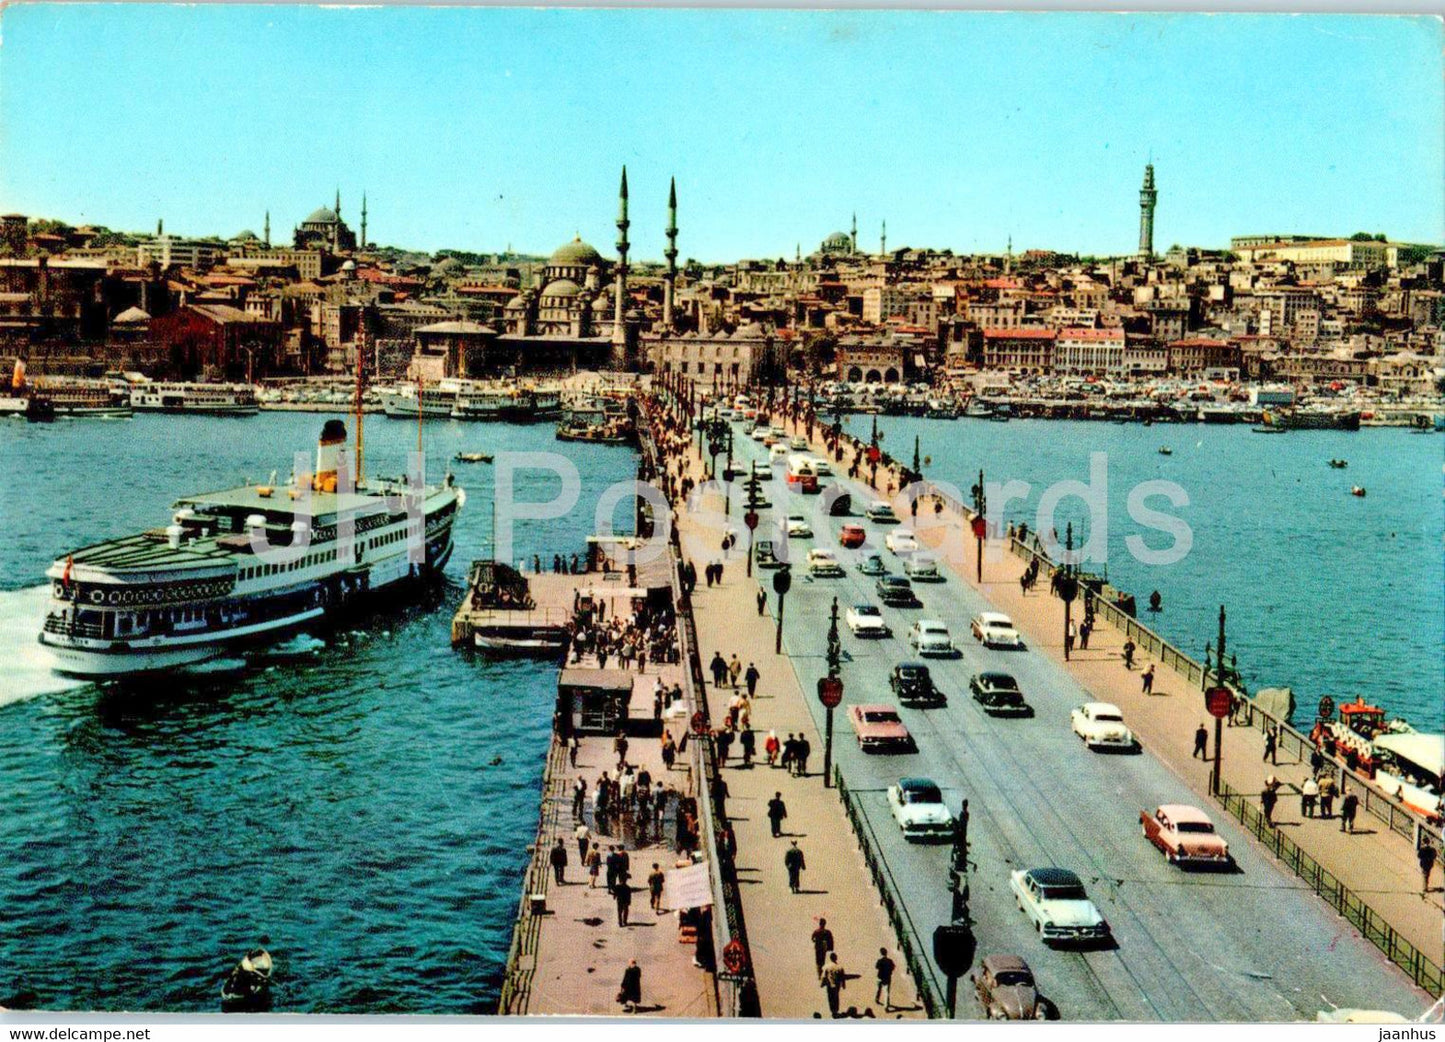 Istanbul - Galata Bridge and New Mosque - ship - 1975 - Turkey - used - JH Postcards